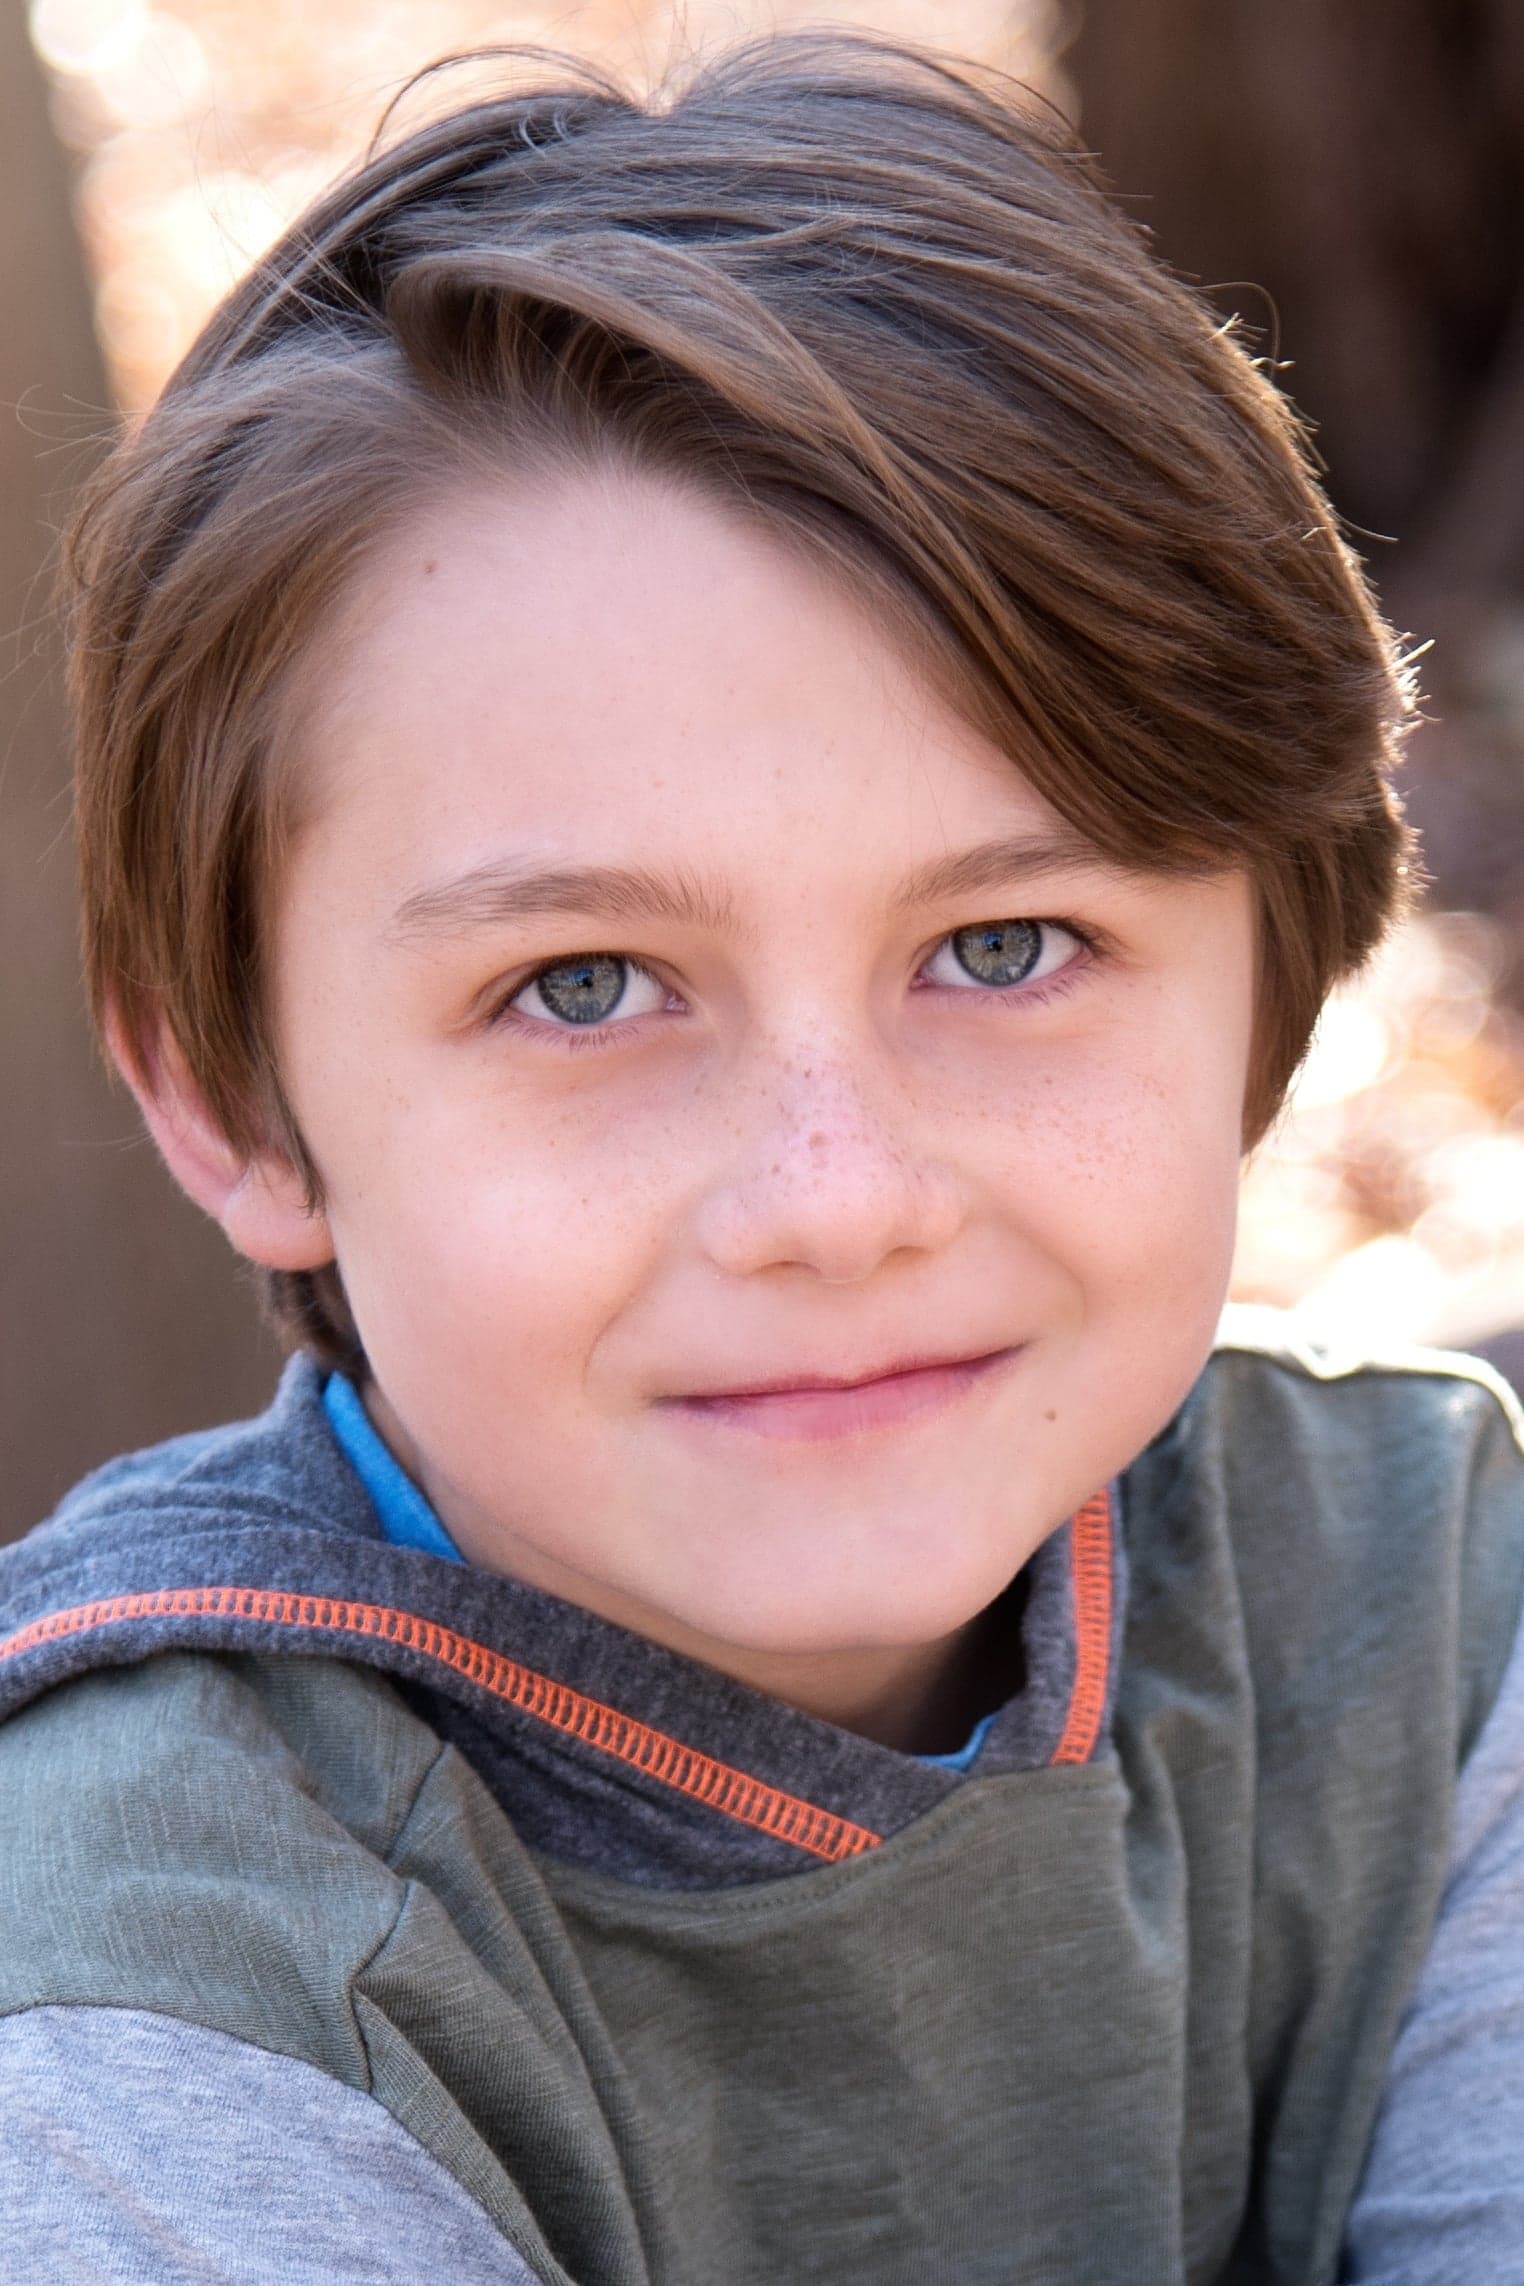 Brady Jenness | David Dellinger's Son